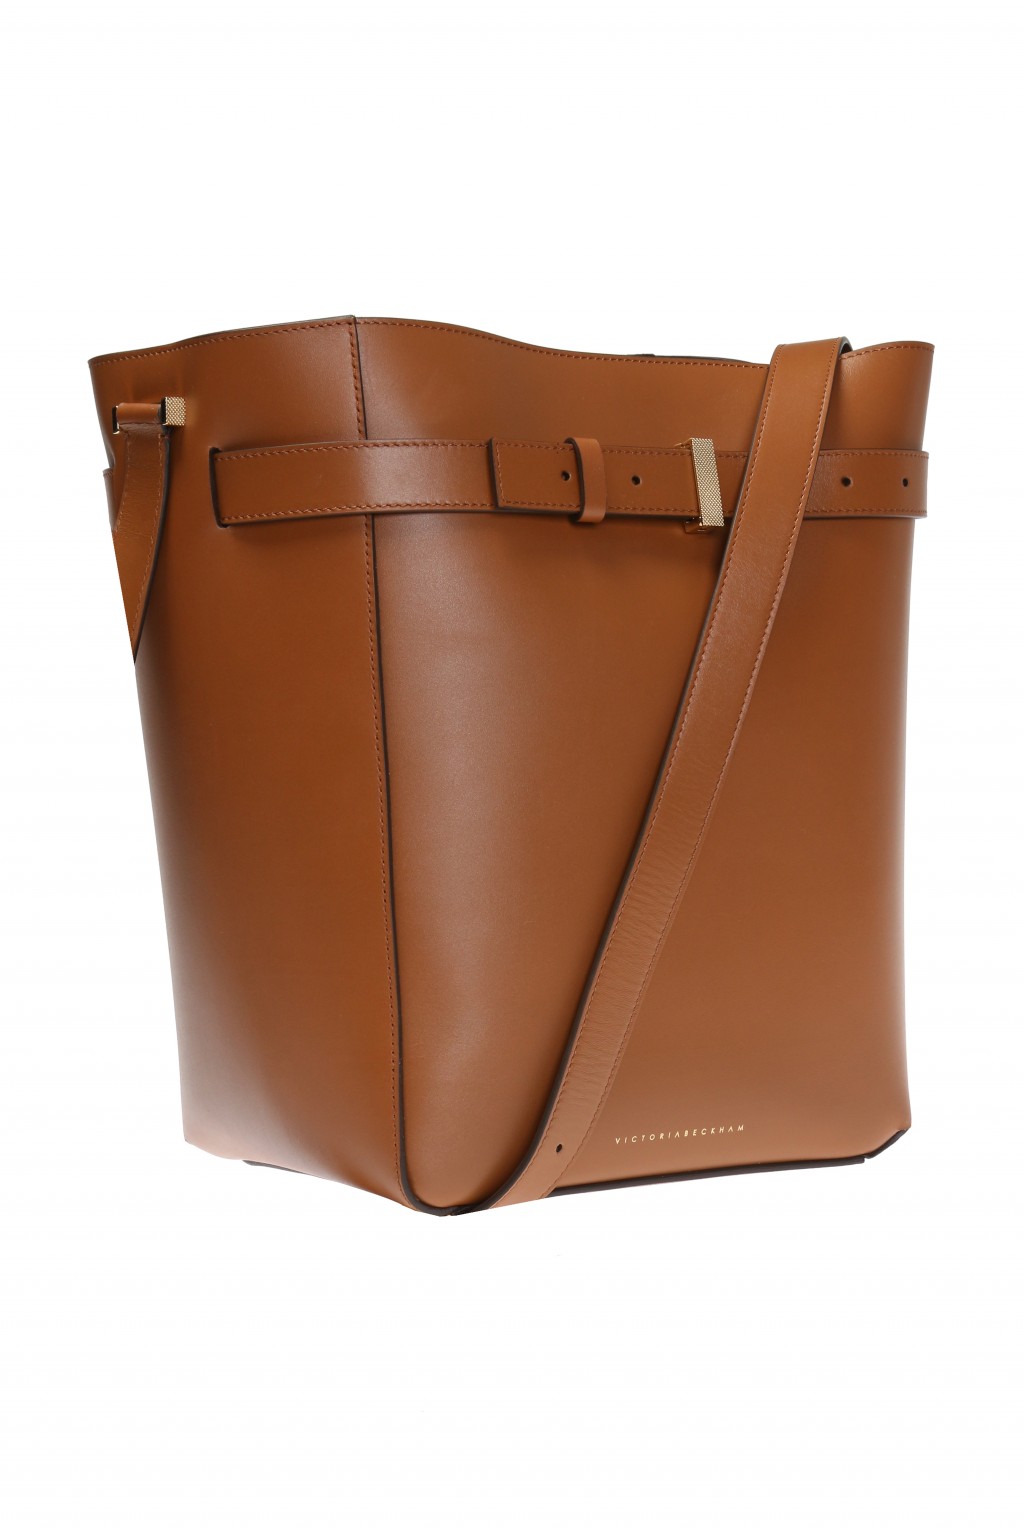 Victoria Beckham 'Twin Bucket' shoulder bag